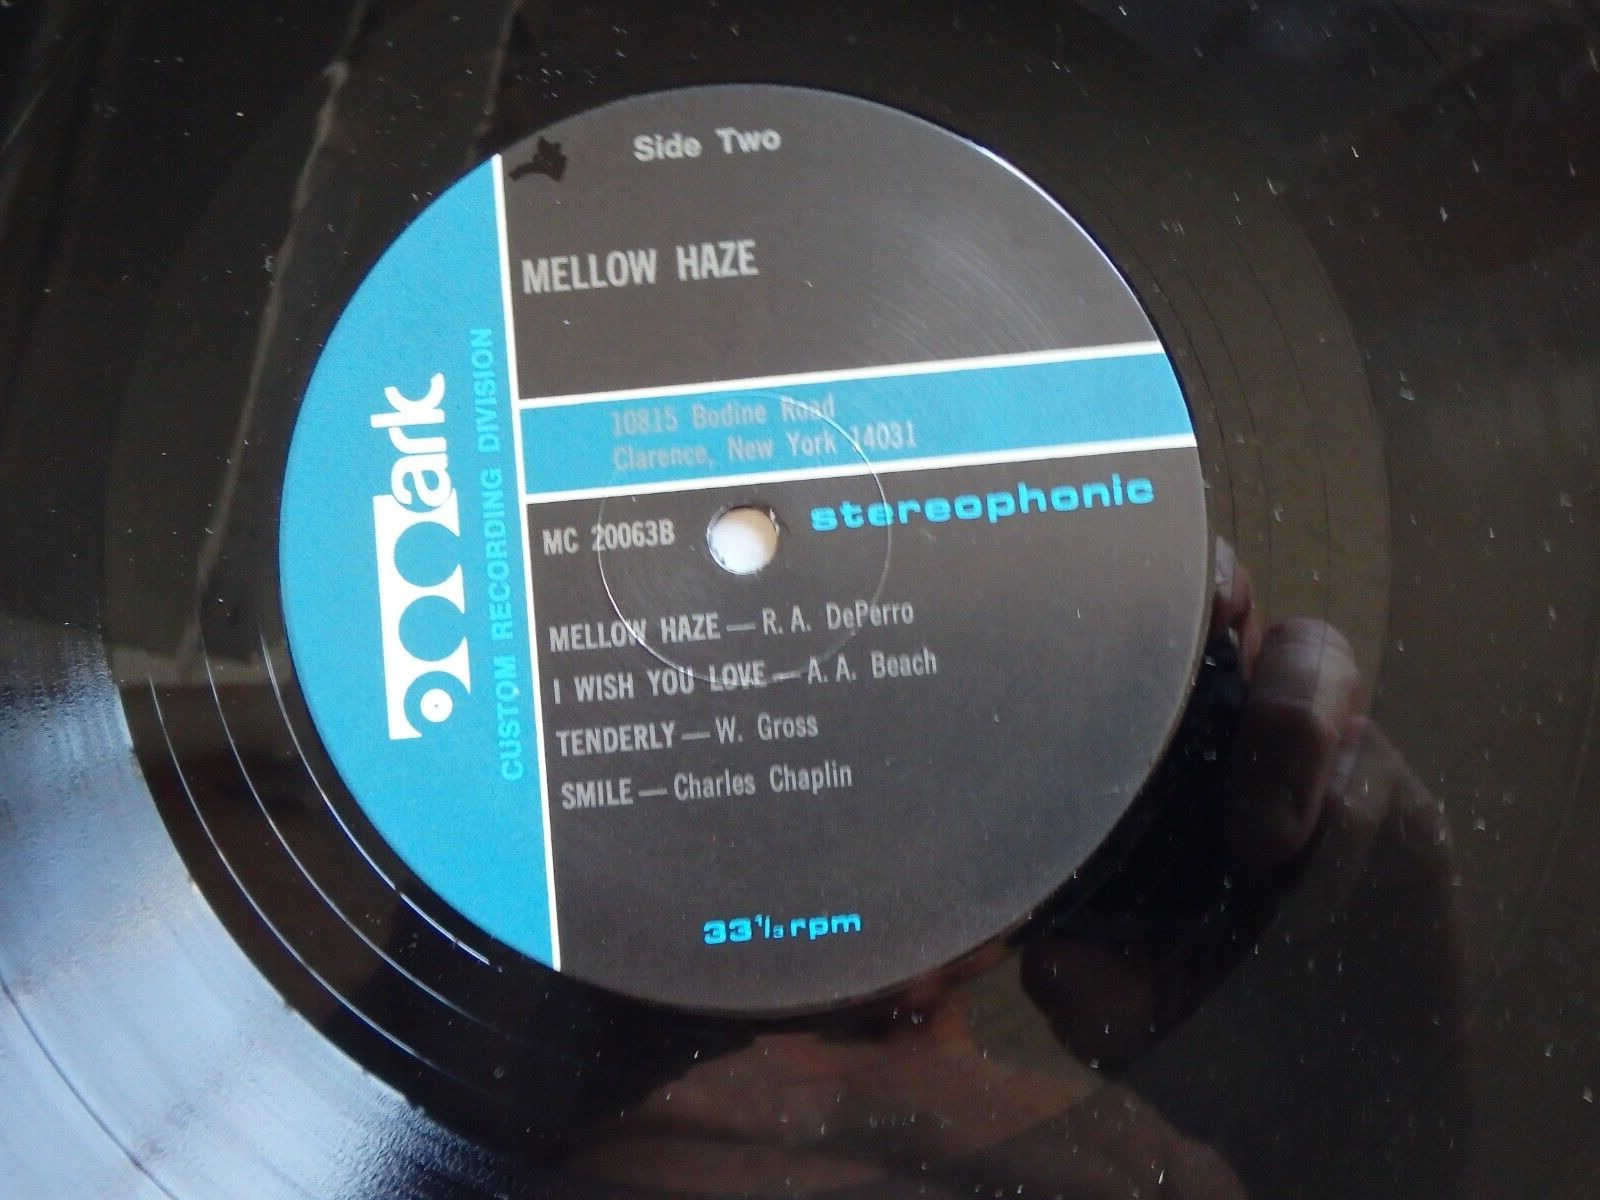 Mellow Haze. RA DeParro, Fred Ebb, M. Grant. Mark Custom Recordings